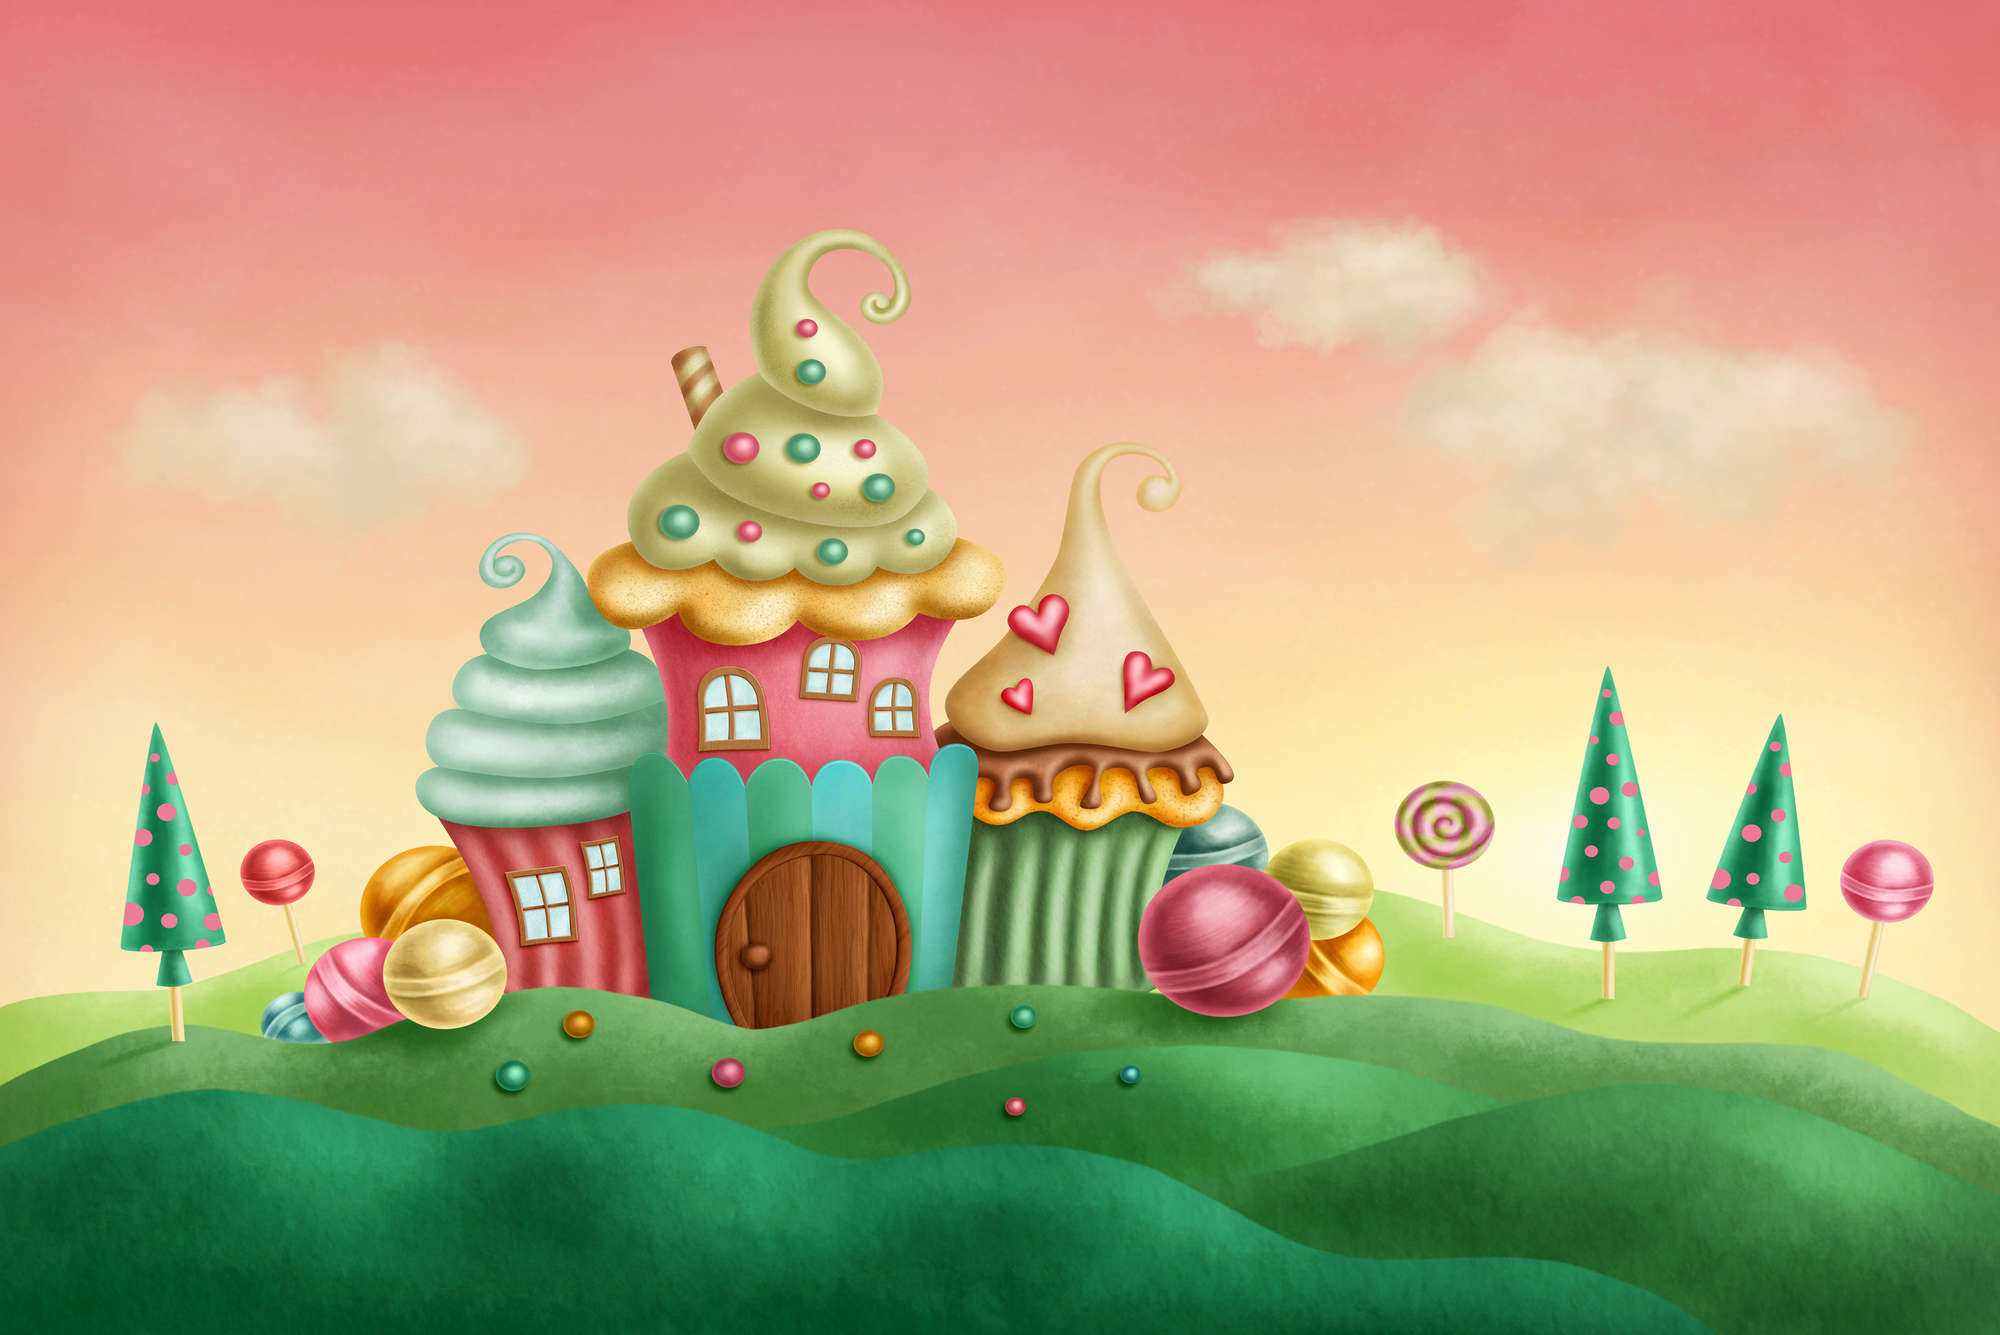             Children's mural castle of sweets on matt smooth nonwoven
        